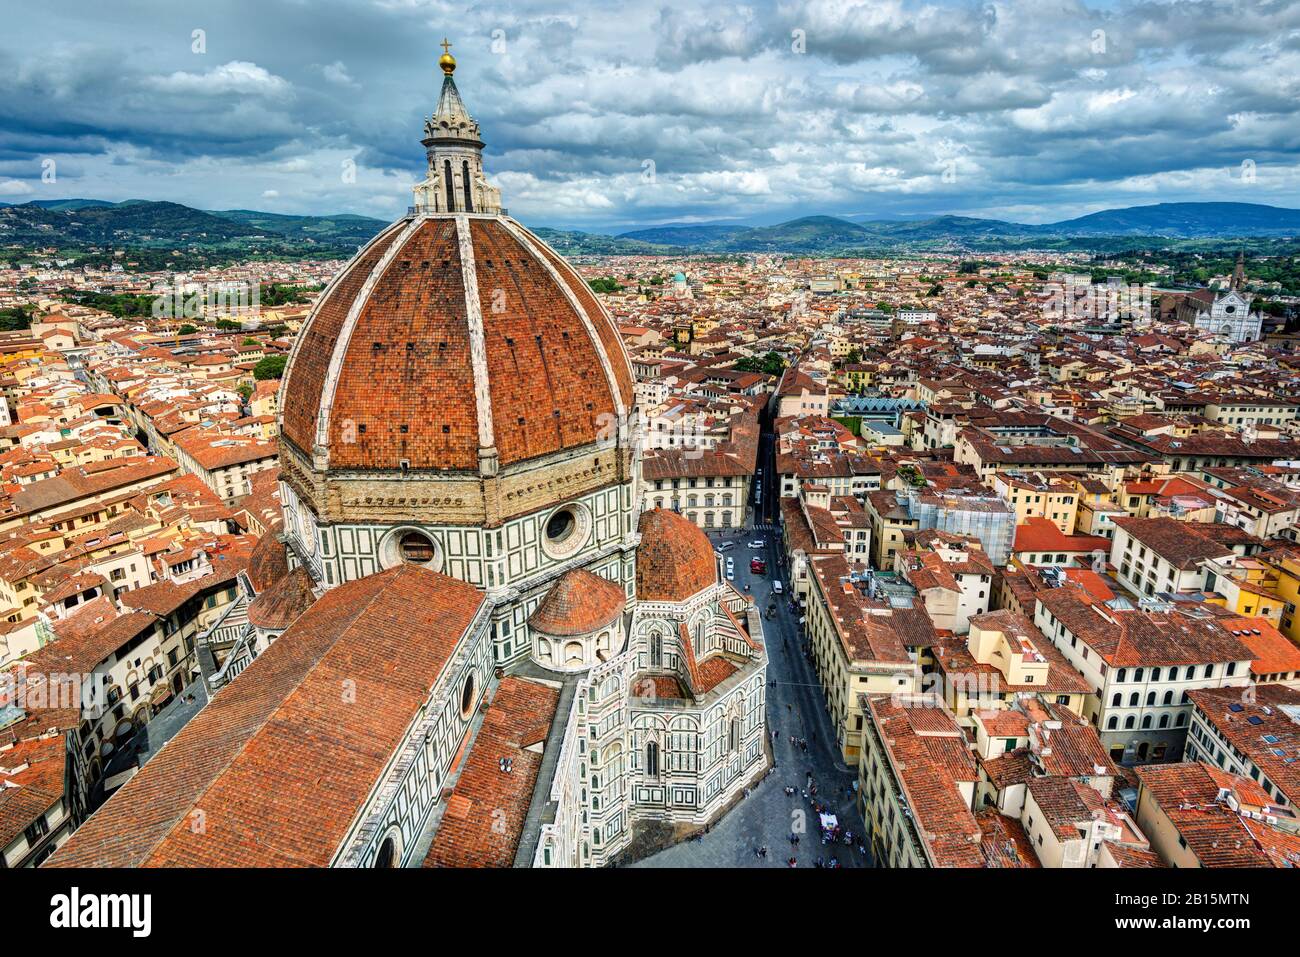 The Basilica di Santa Maria del Fiore (Basilica of Saint Mary of the Flower) in Florence, Italy Stock Photo